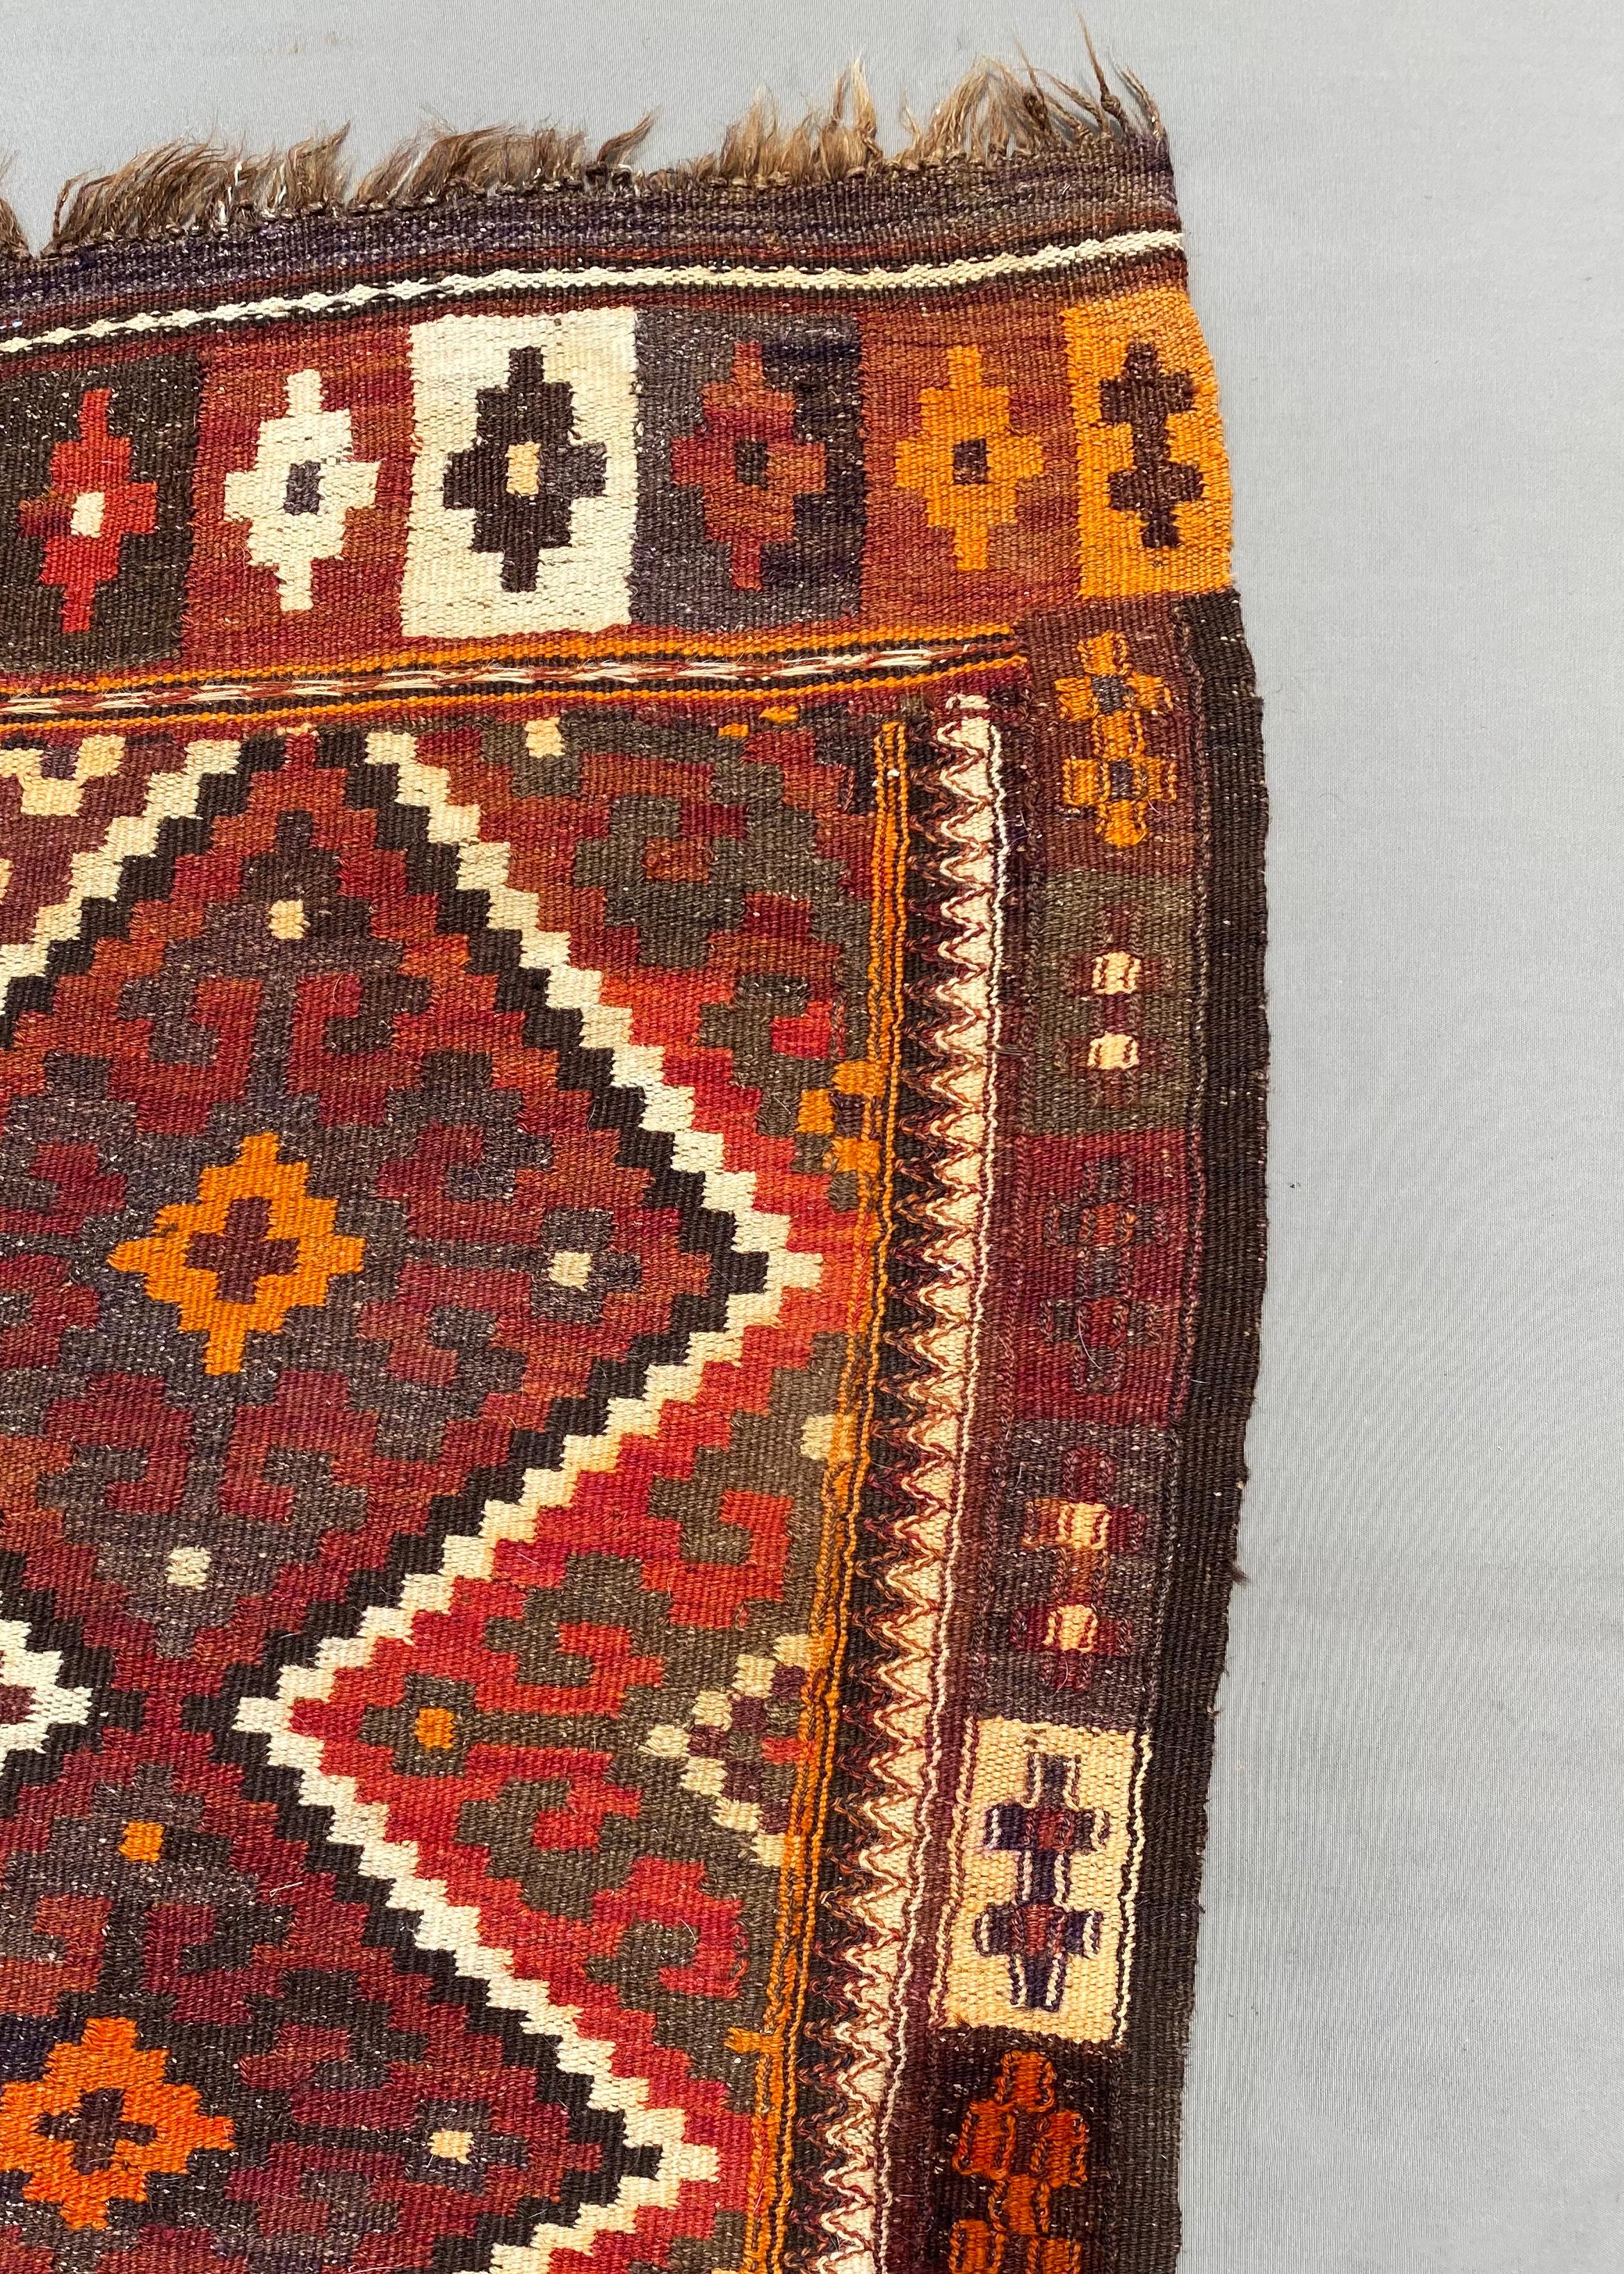 Uzbekistan Tartari Ranghi Kilim Rug from Wool, Early 20th Century For Sale 4